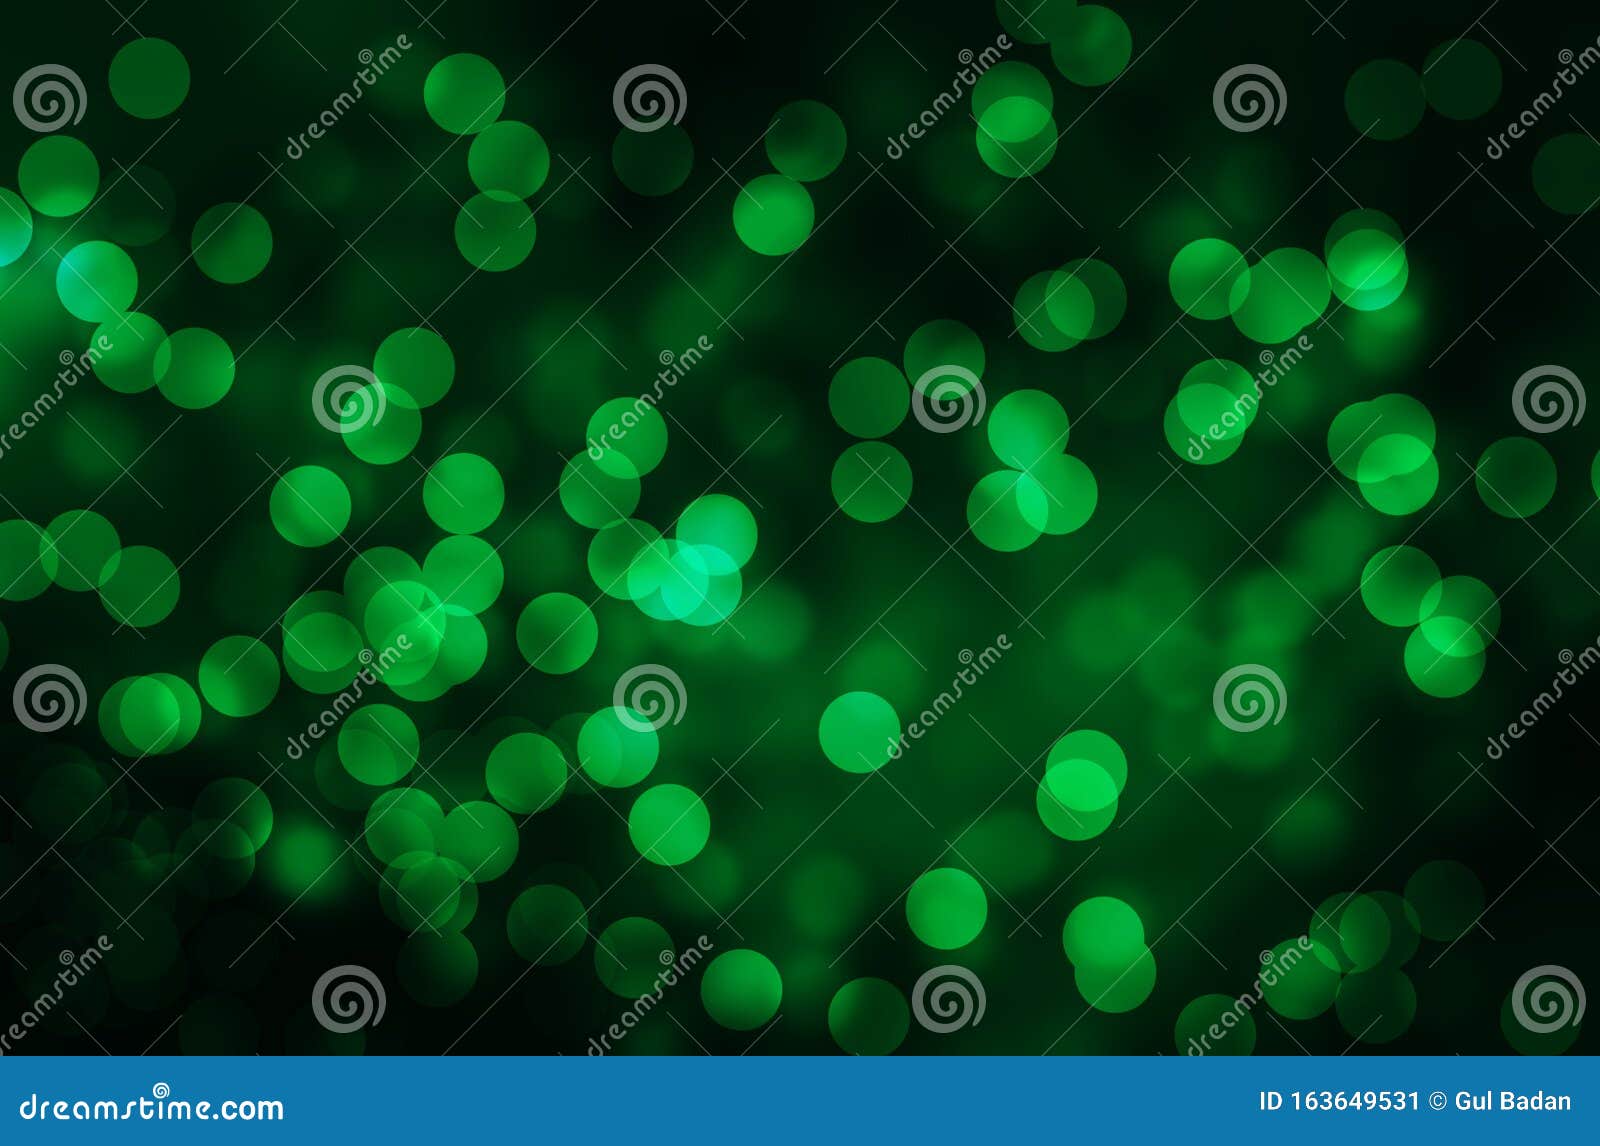 Dark Green Bookeh Effect Wallpaper Background New Amazing Stock  Illustration - Illustration of background, dark: 163649531